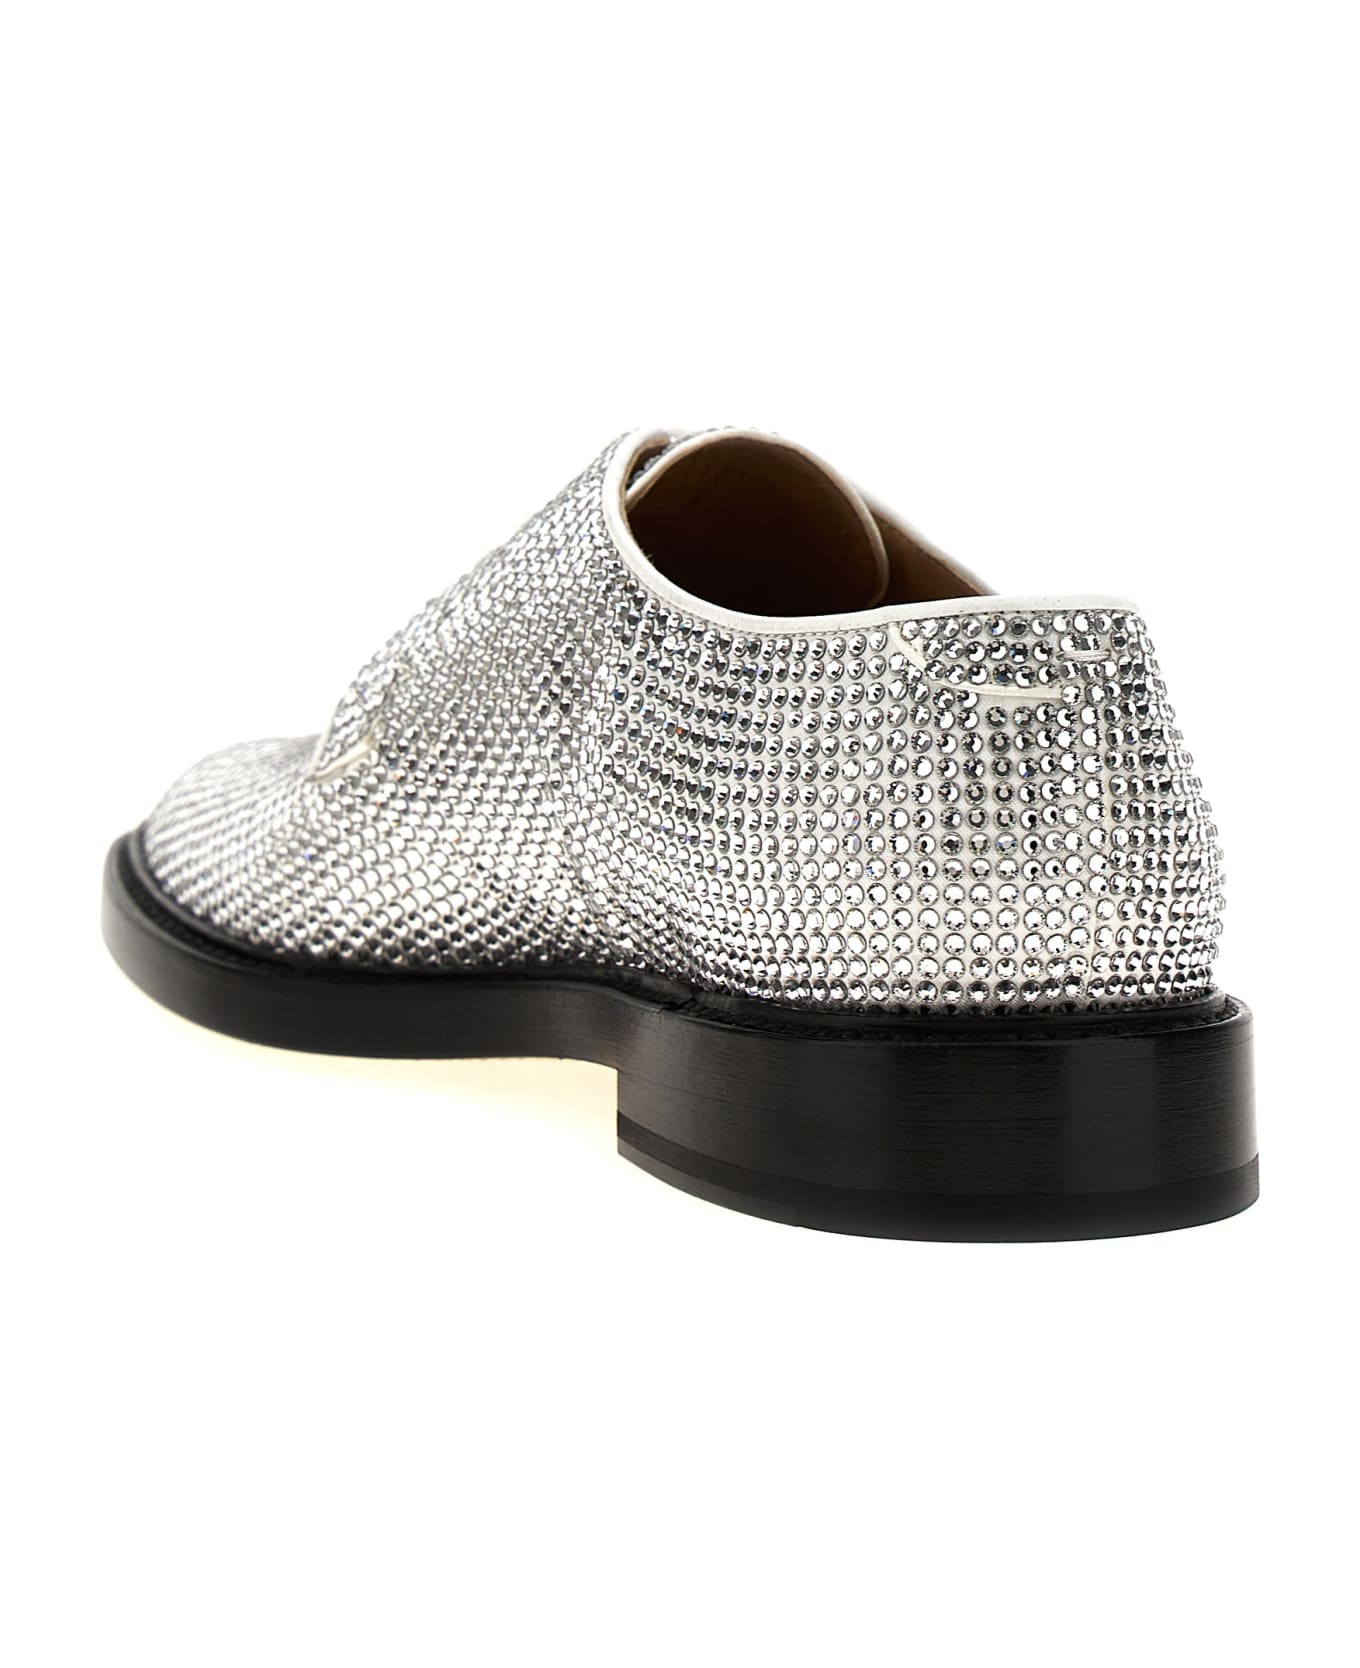 Maison Margiela Tabi Lace Up Shoes - Silver